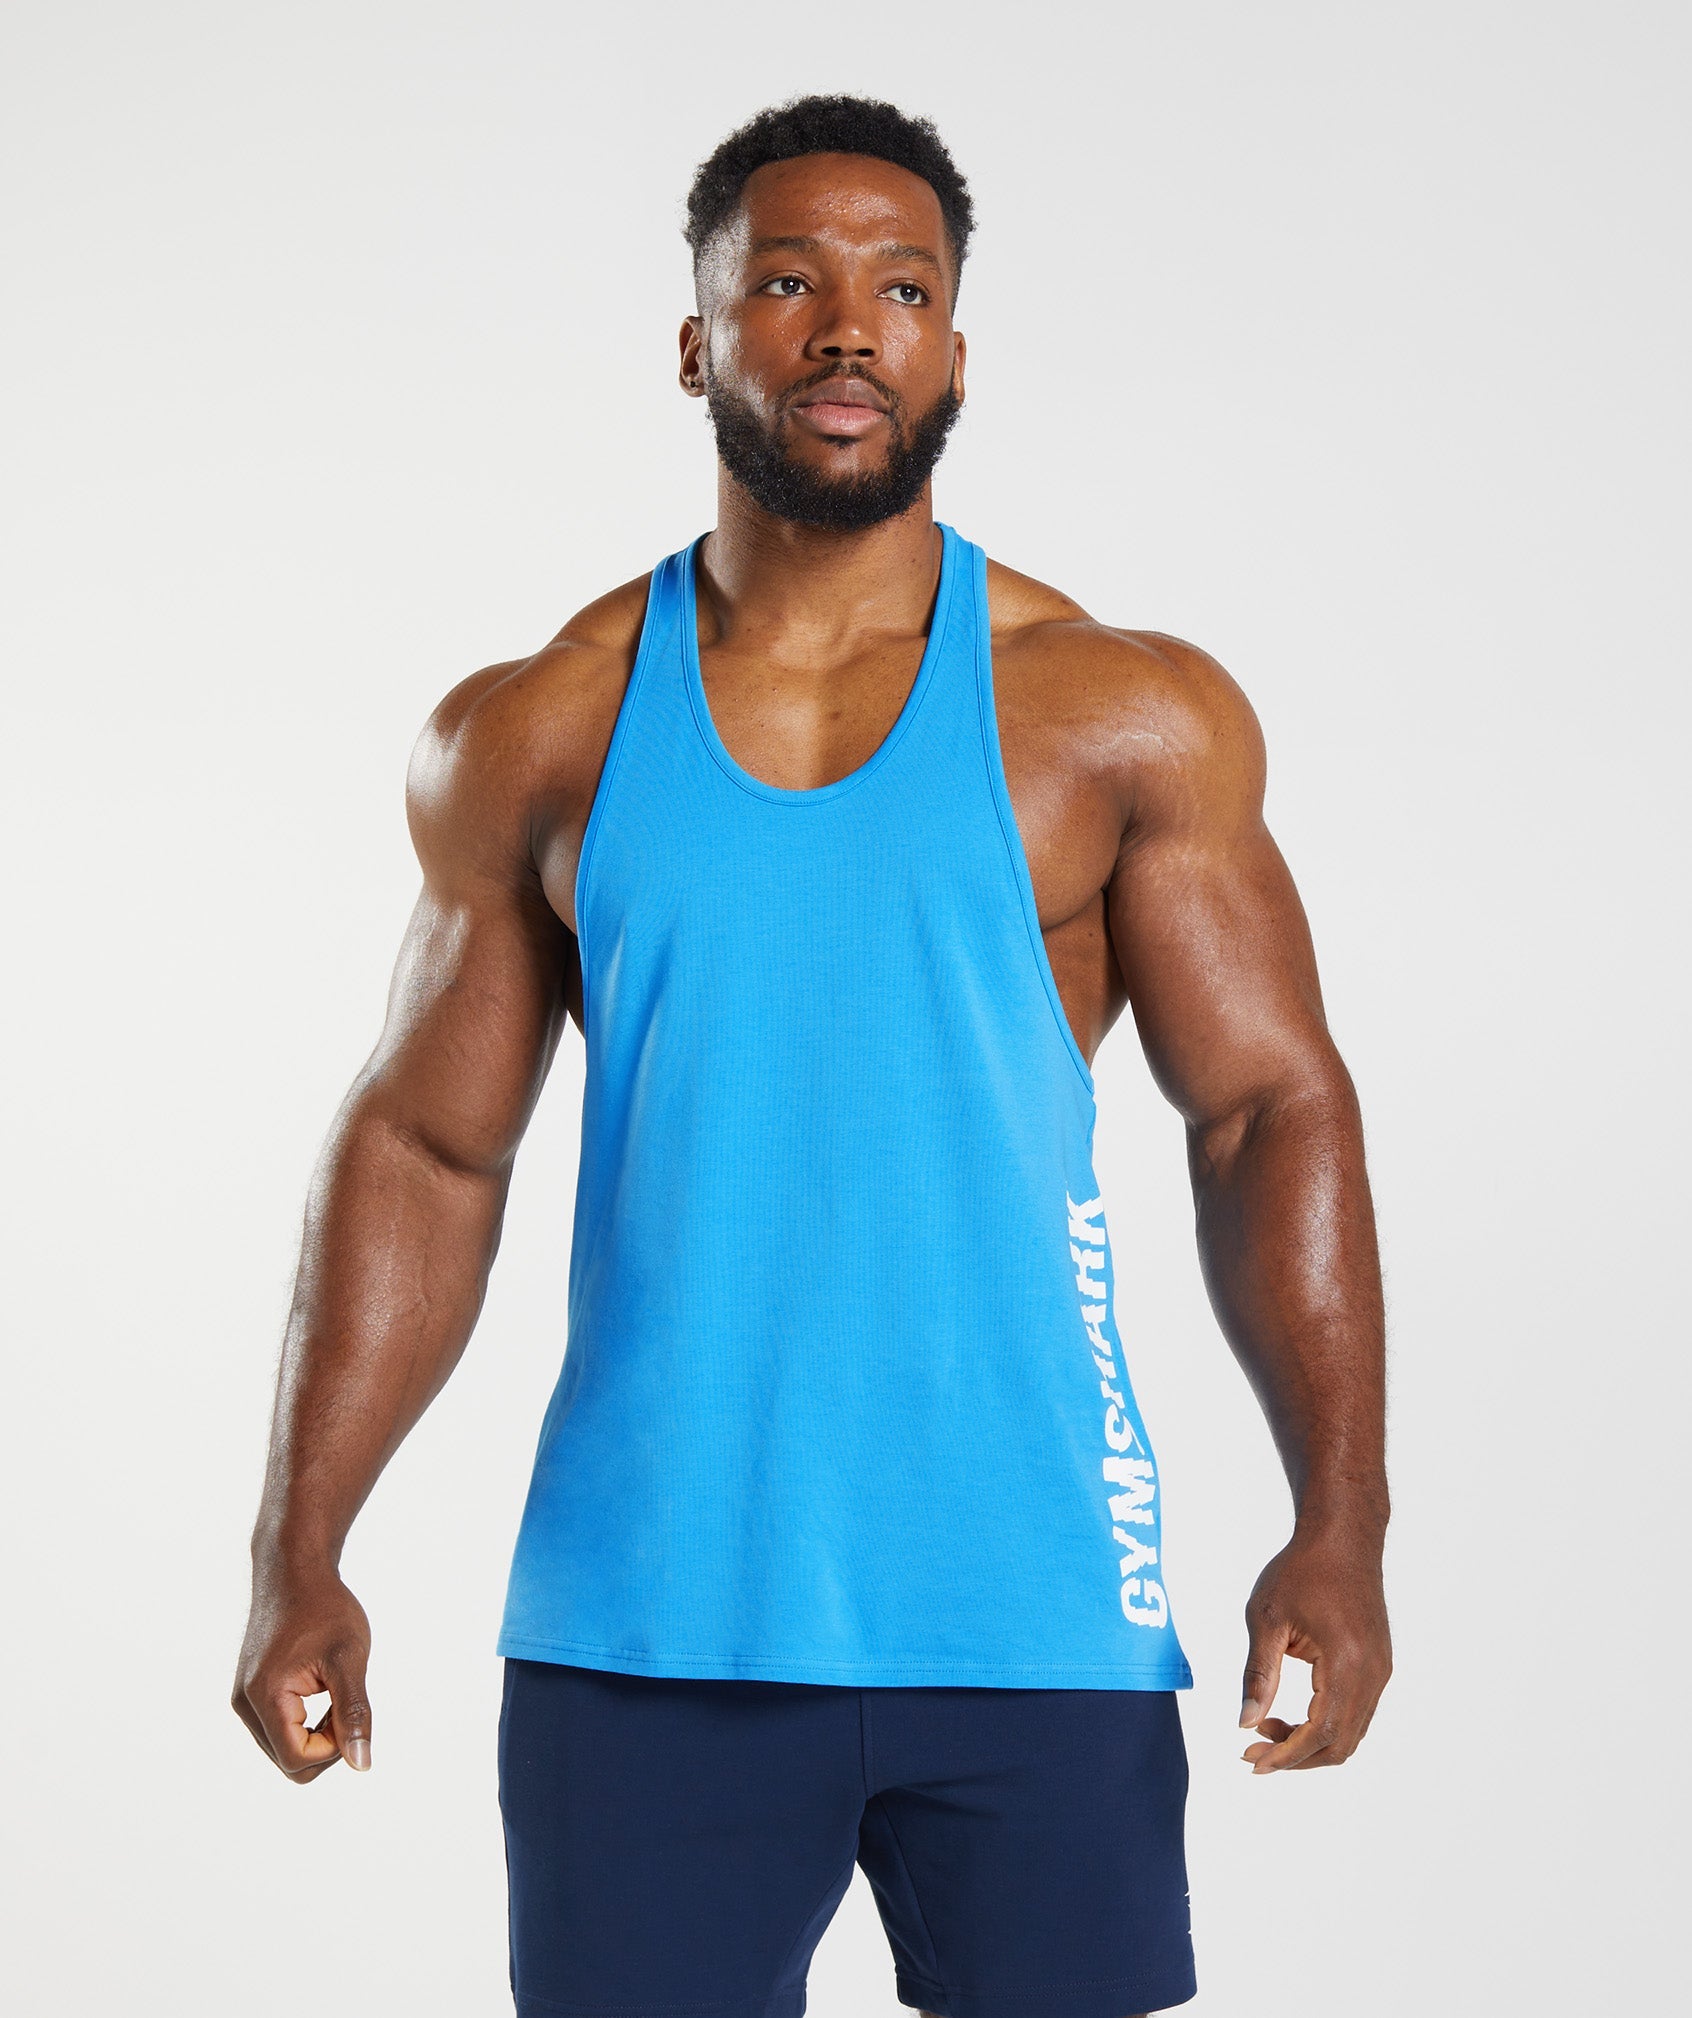 Brand Famous Gold Gym Shark Vest Bodybuilding Stringer Fitness Spaghetti  Straps Tank Top Men Fashion o-neck Cotton Gymshark XXL